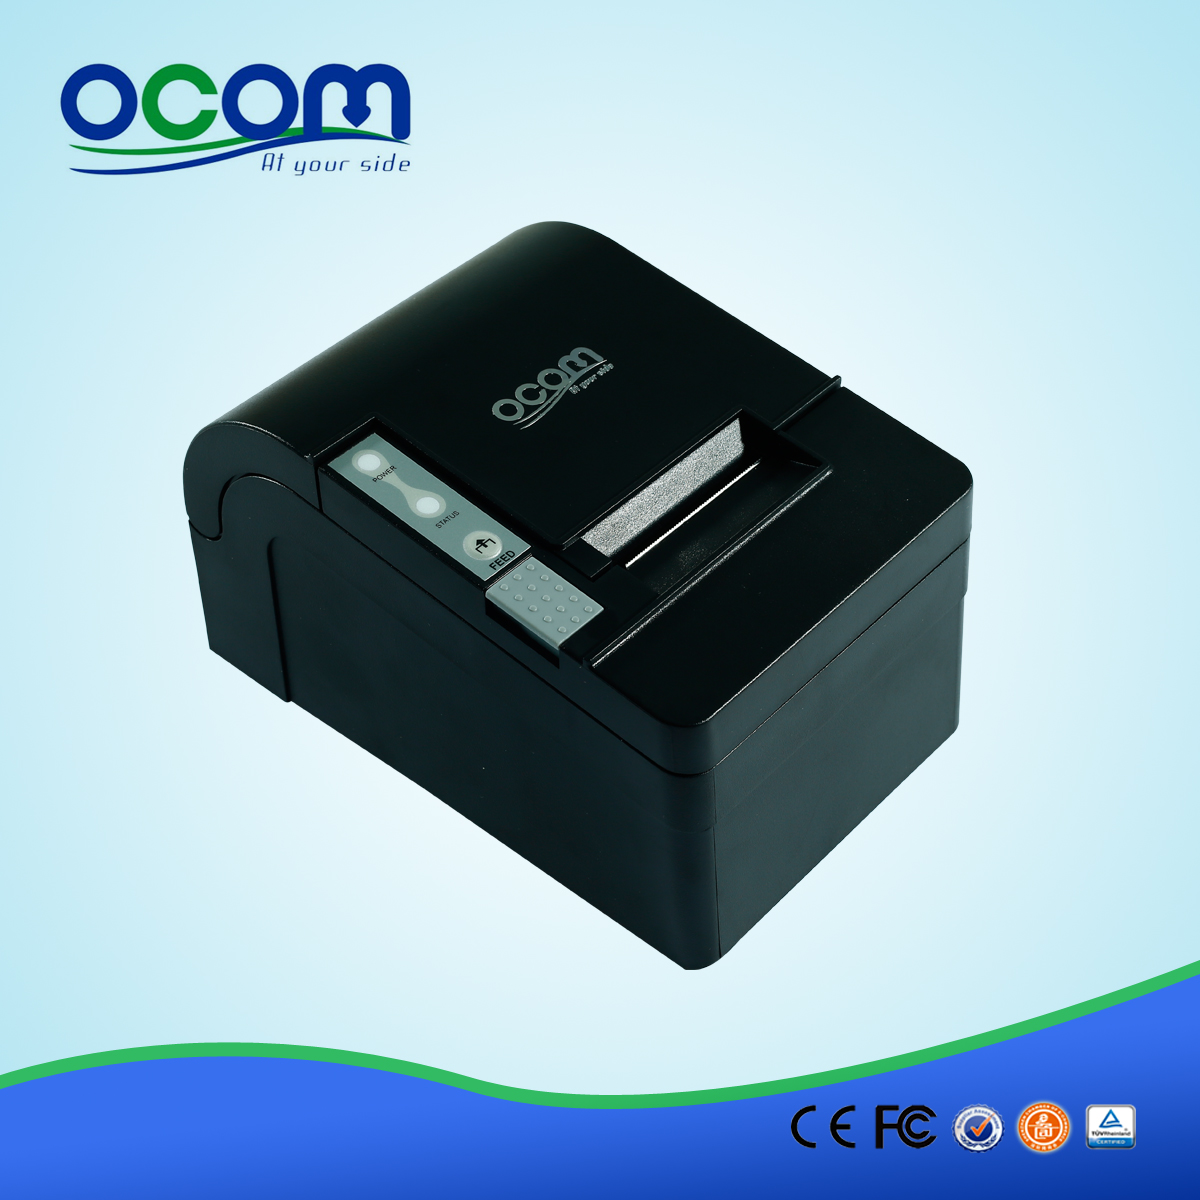 OCPP-58C 58mm USB Impresora Térmica de Recibo Con Chofer